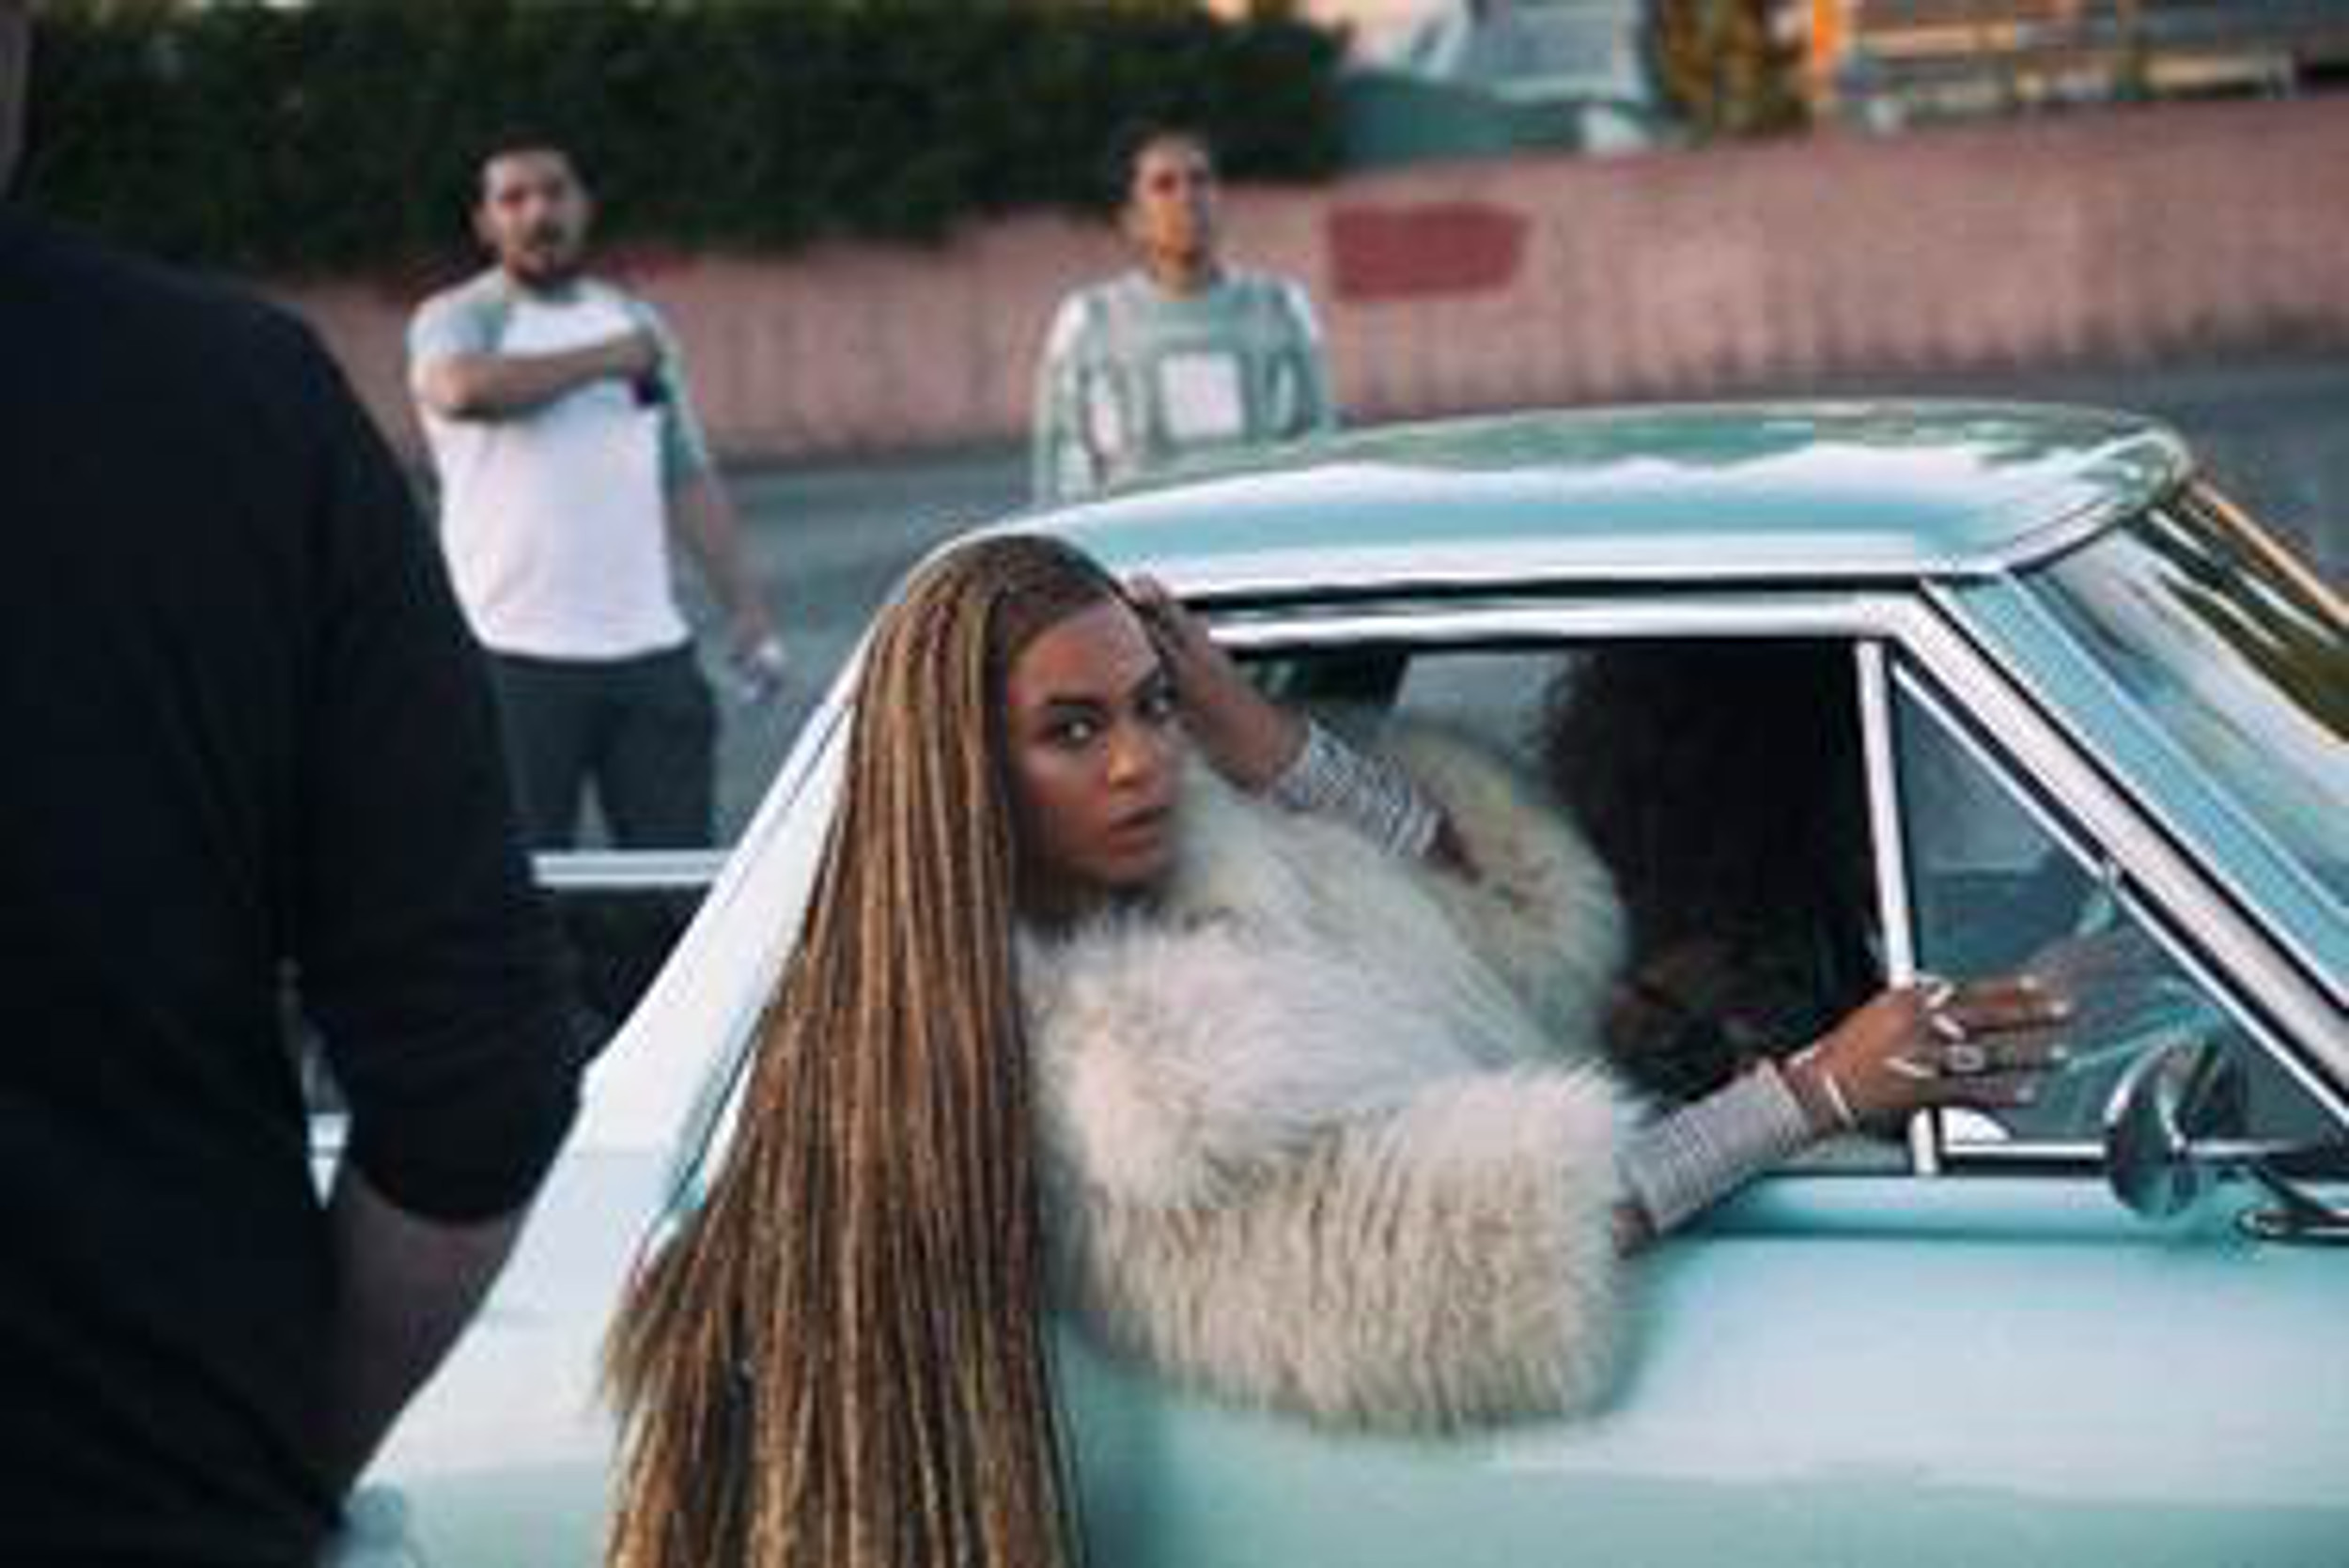 Promotional image of Beyoncé's new album 'Lemonade' (by Robin Harper)